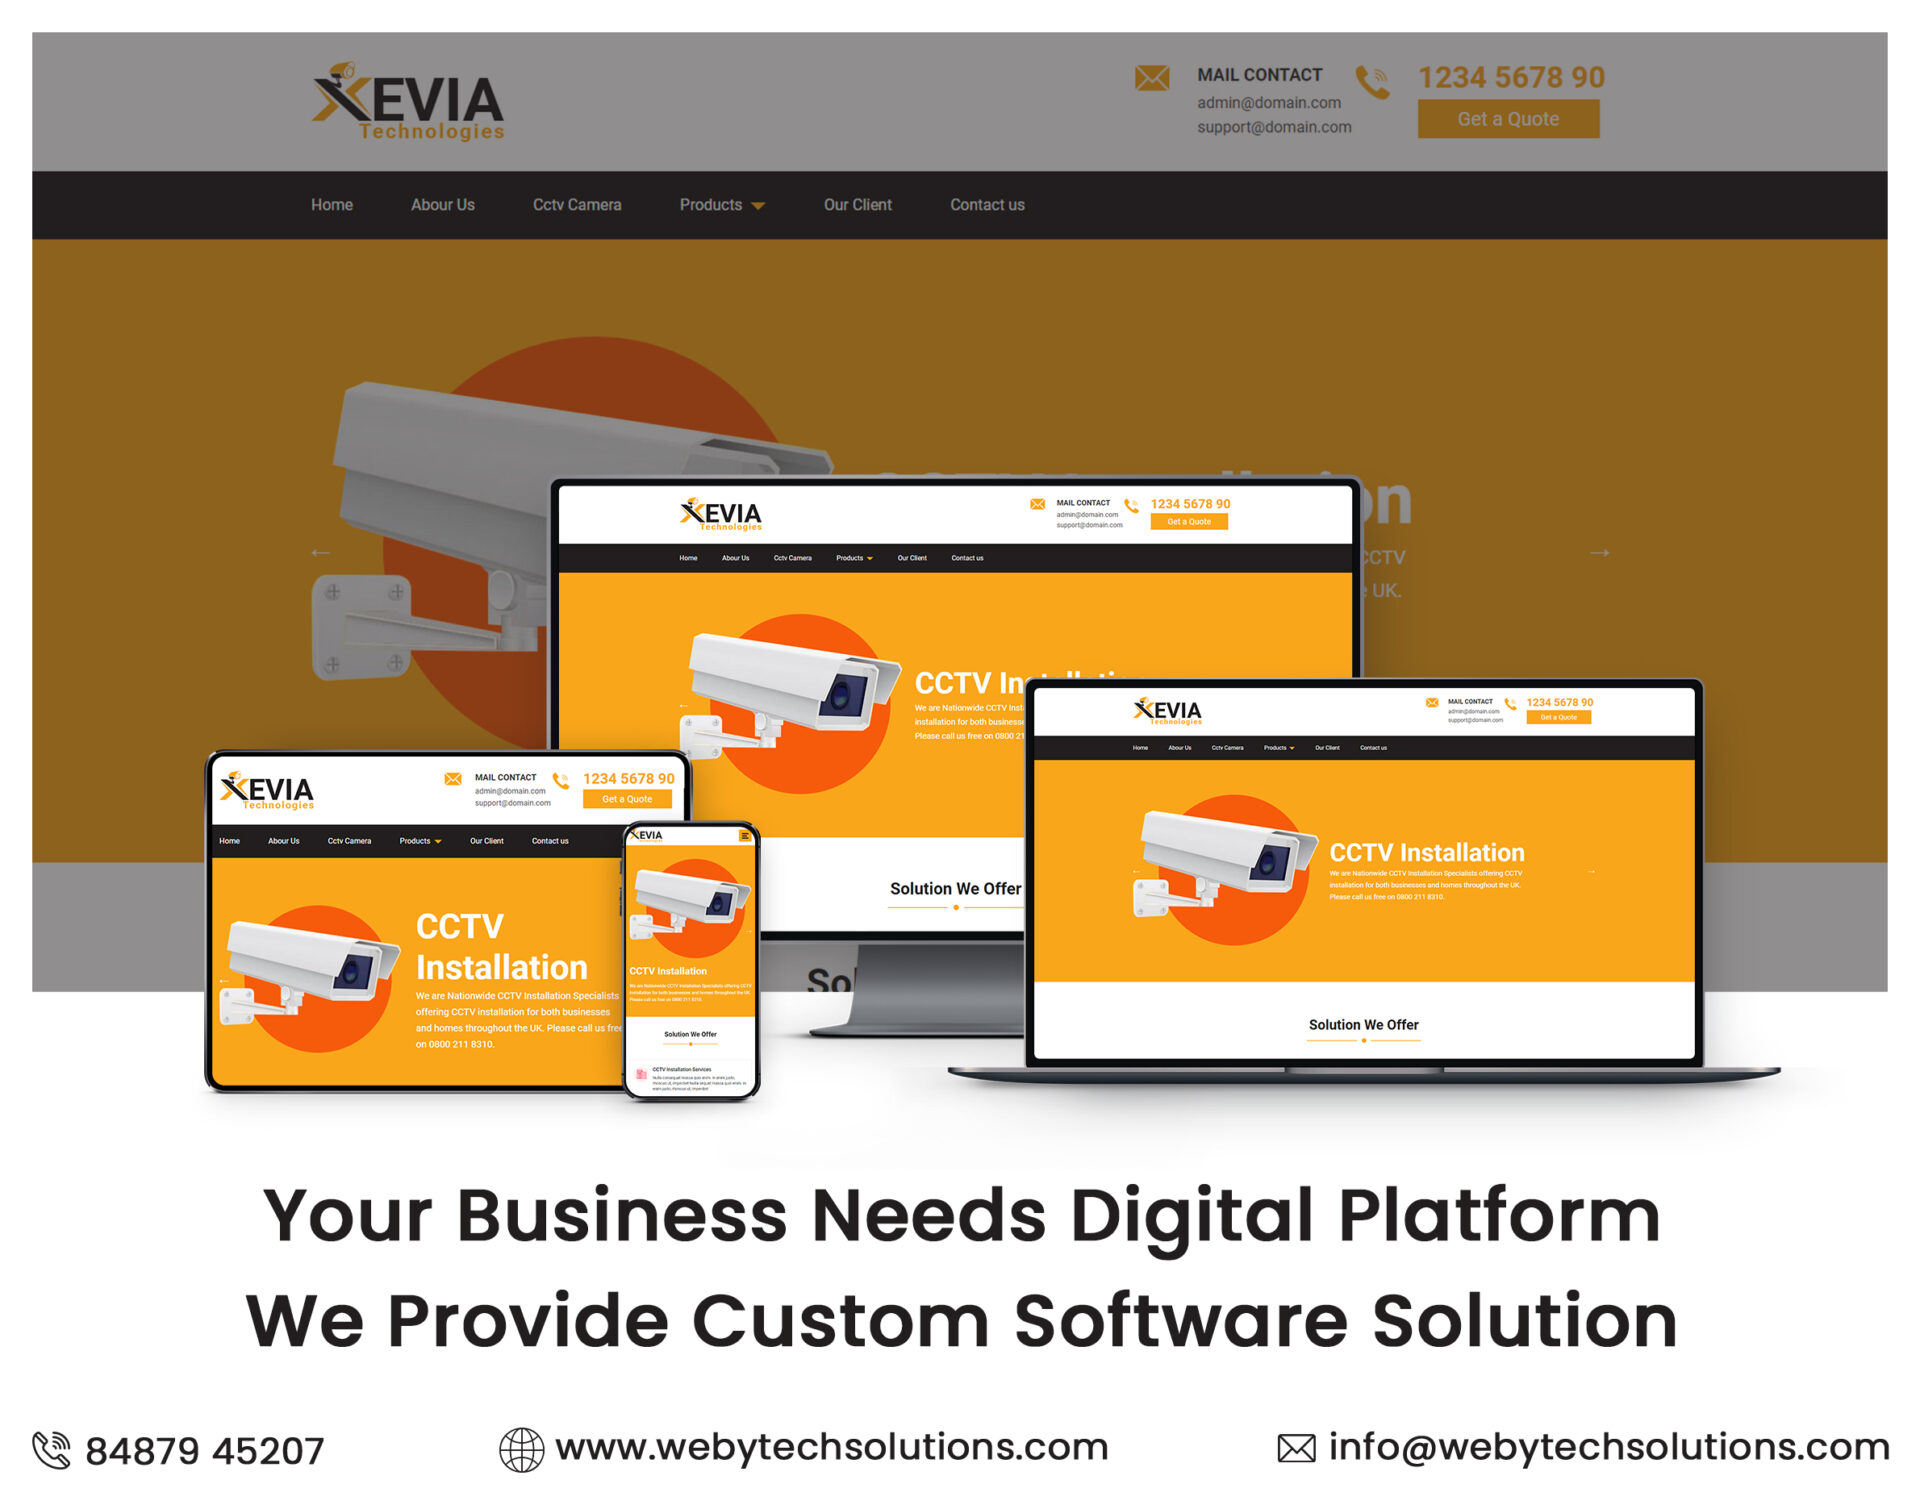 Xevia Technologies